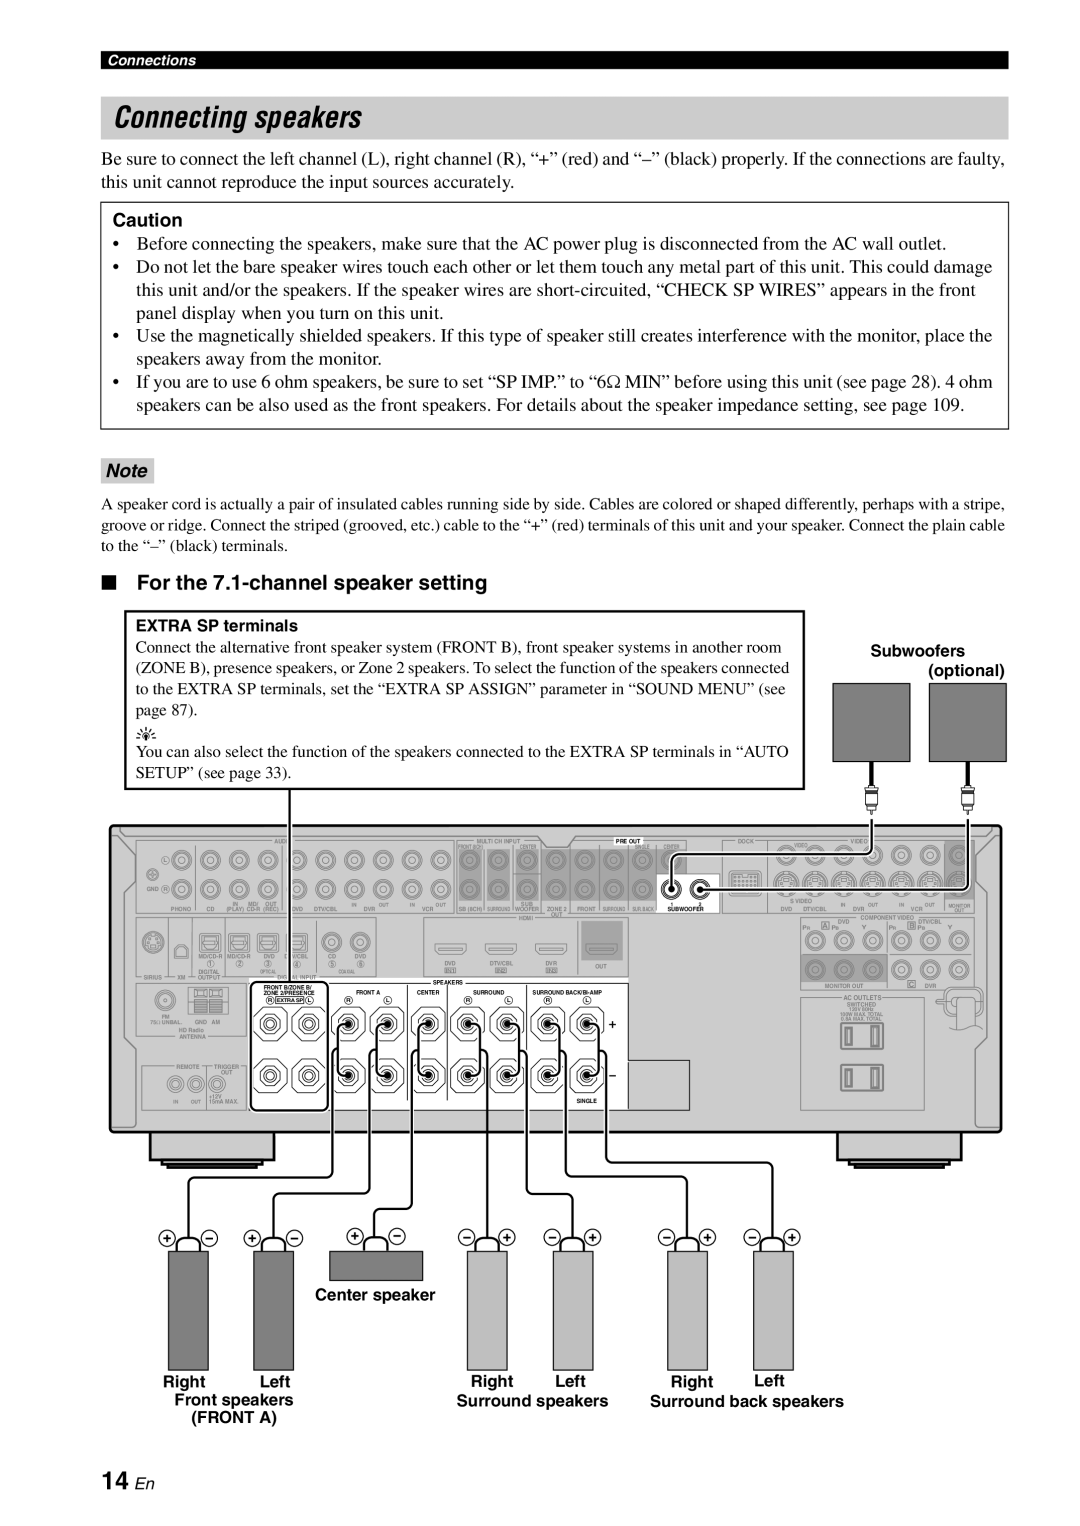 Yamaha HTR-6180 owner manual Connecting speakers, 14 En, For the 7.1-channelspeaker setting 